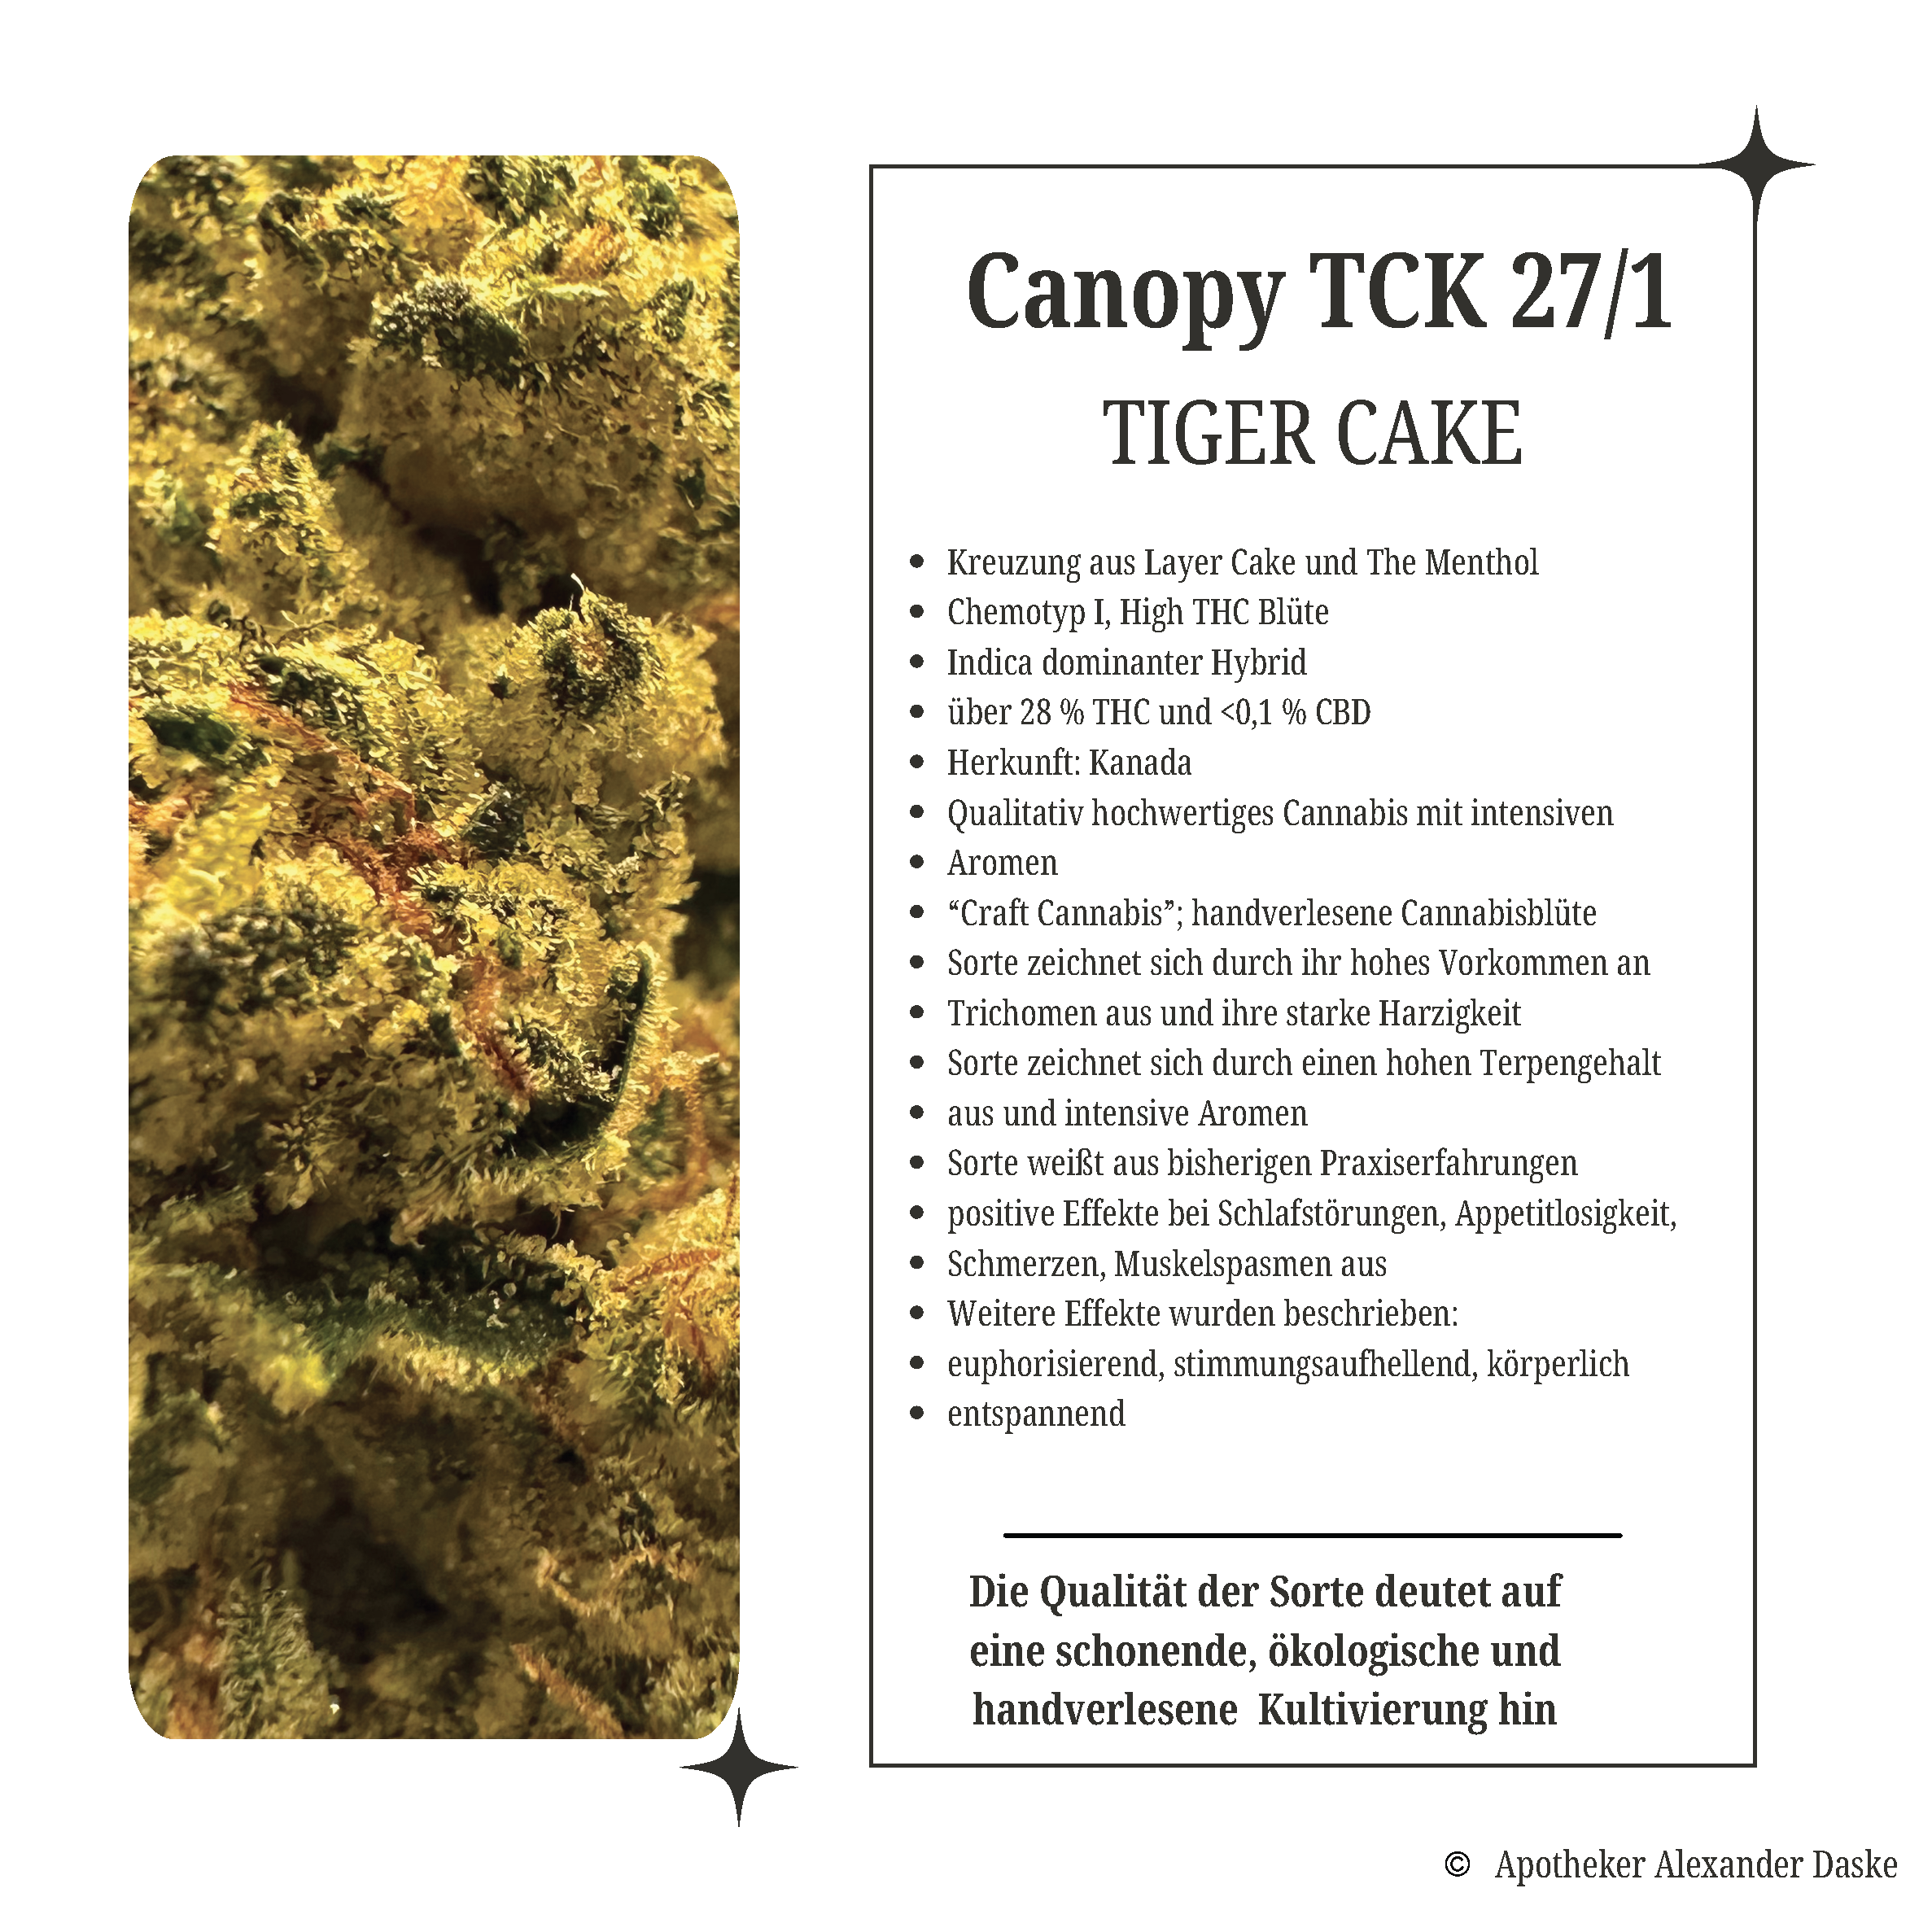 Canopy TCK 27/1 Tiger Cake